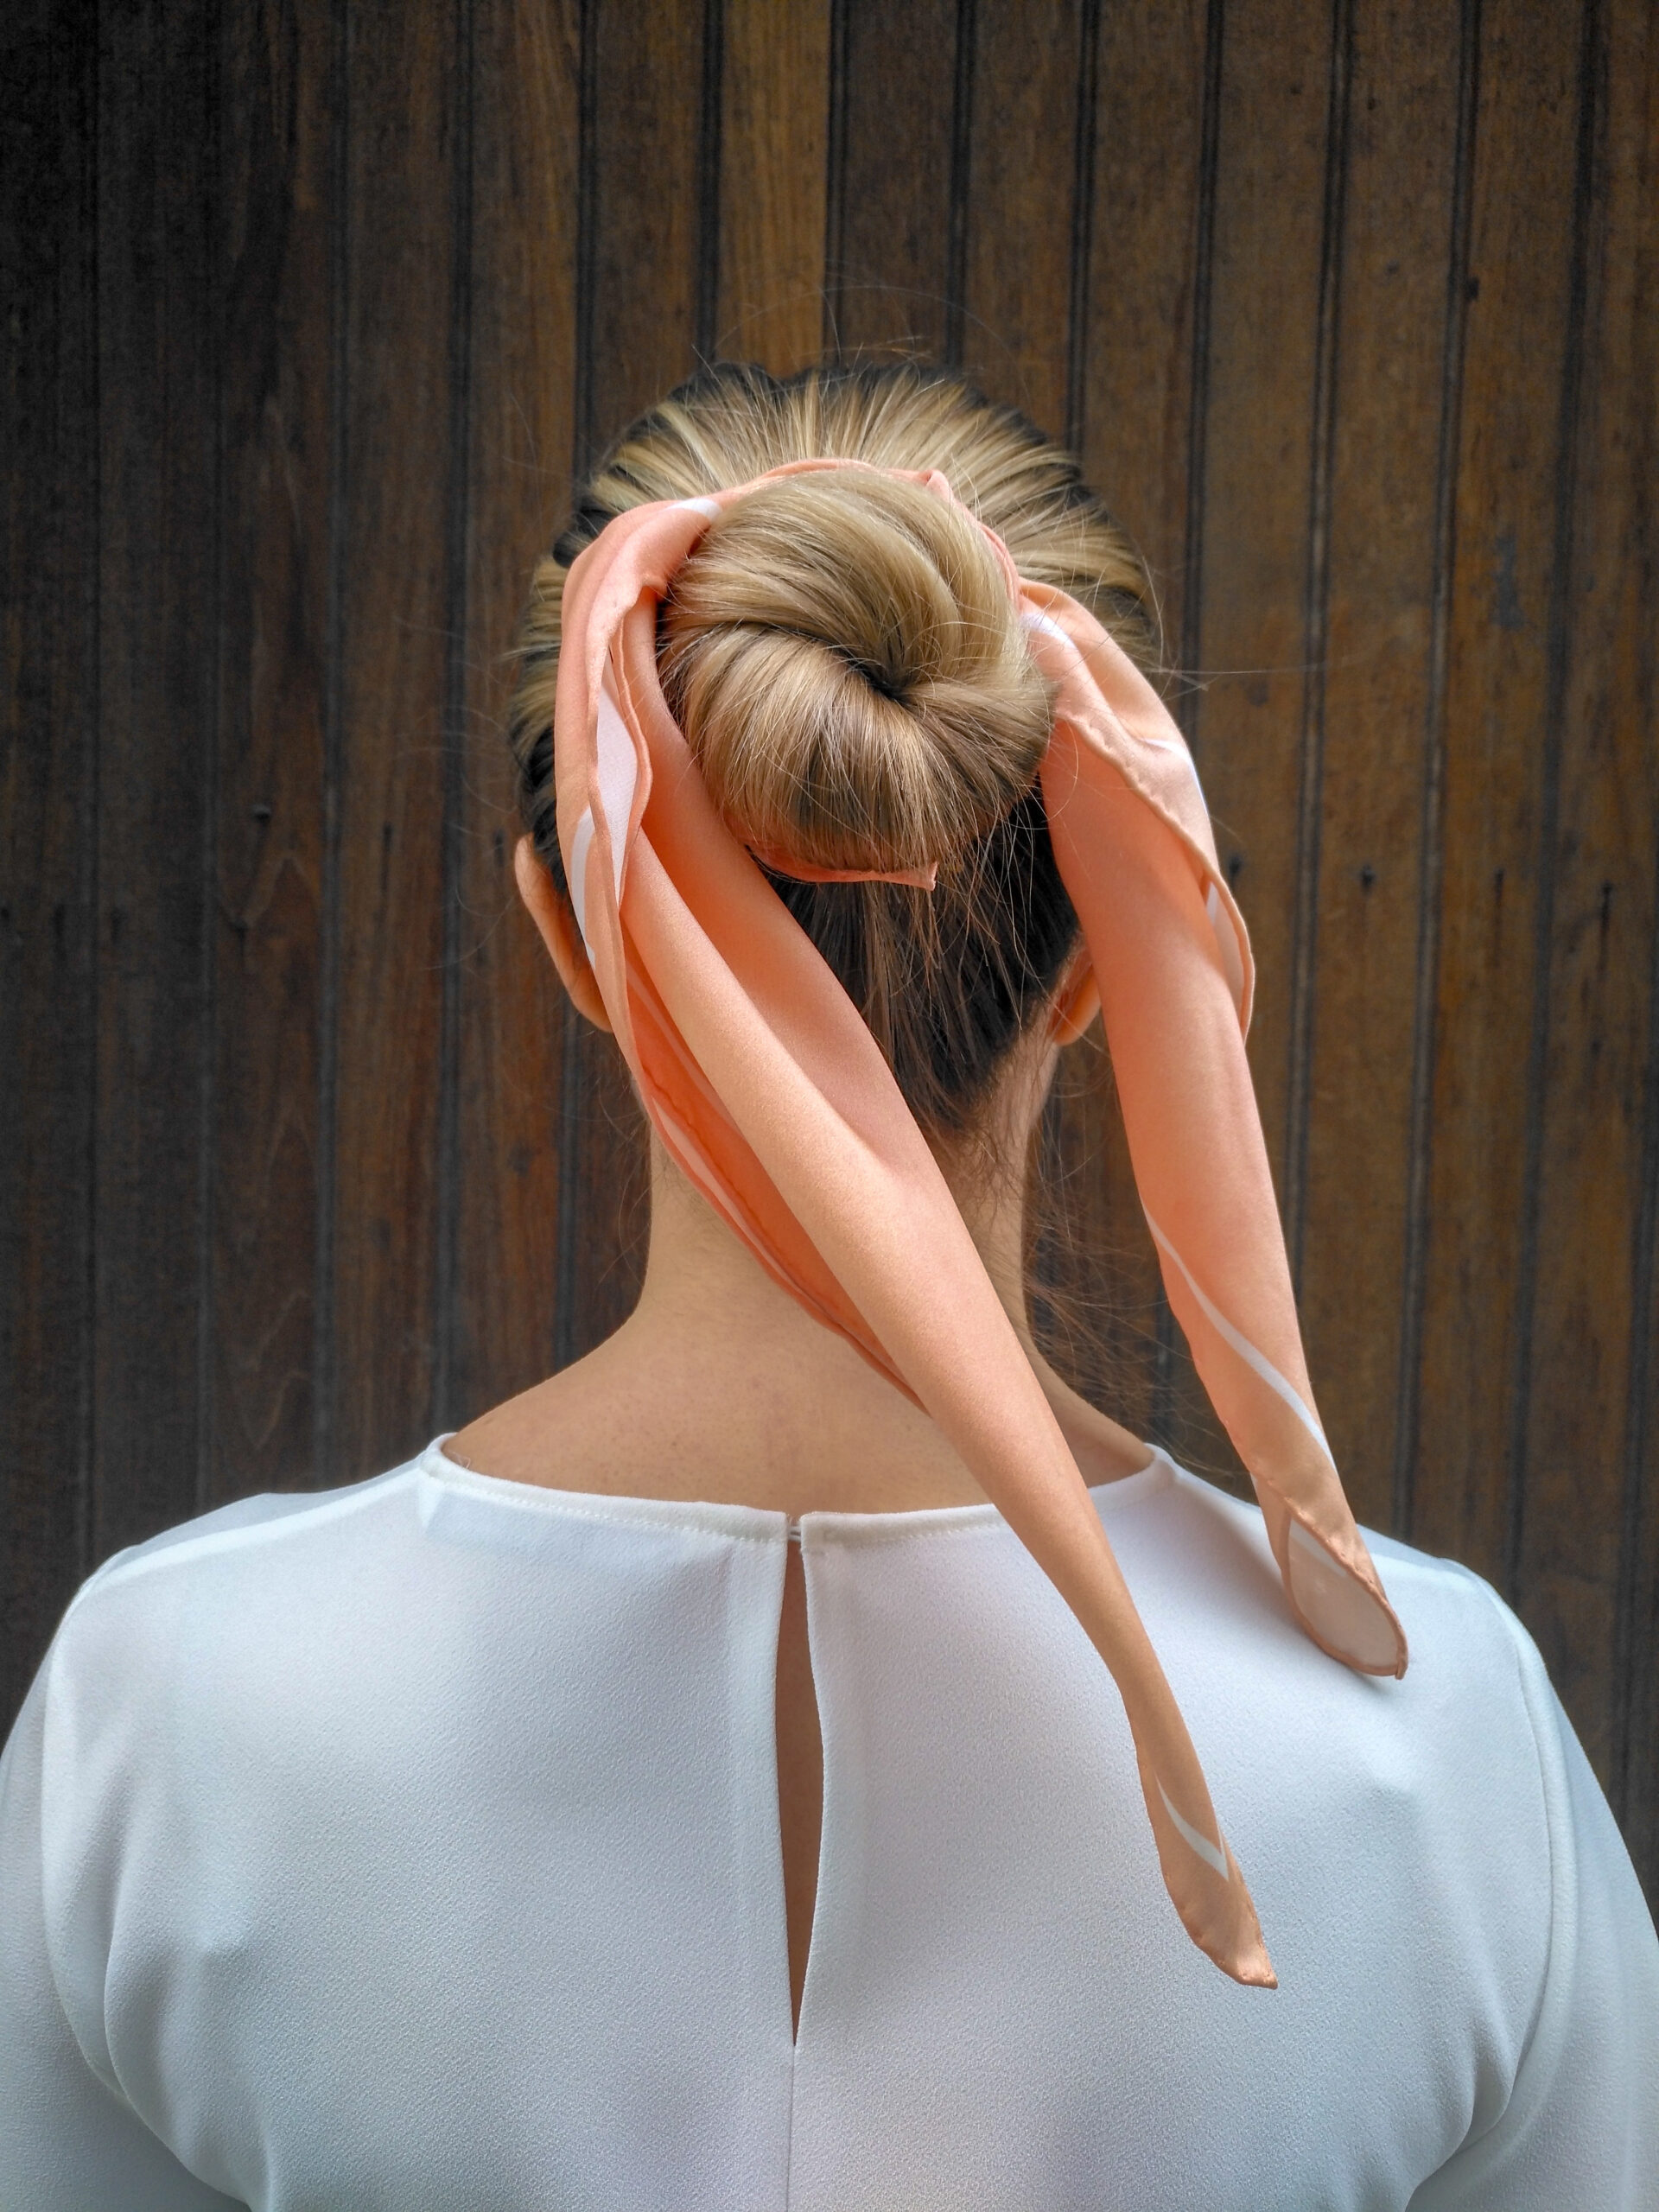 Easy hair styling ideas with a small silk scarf - Studio Heijne